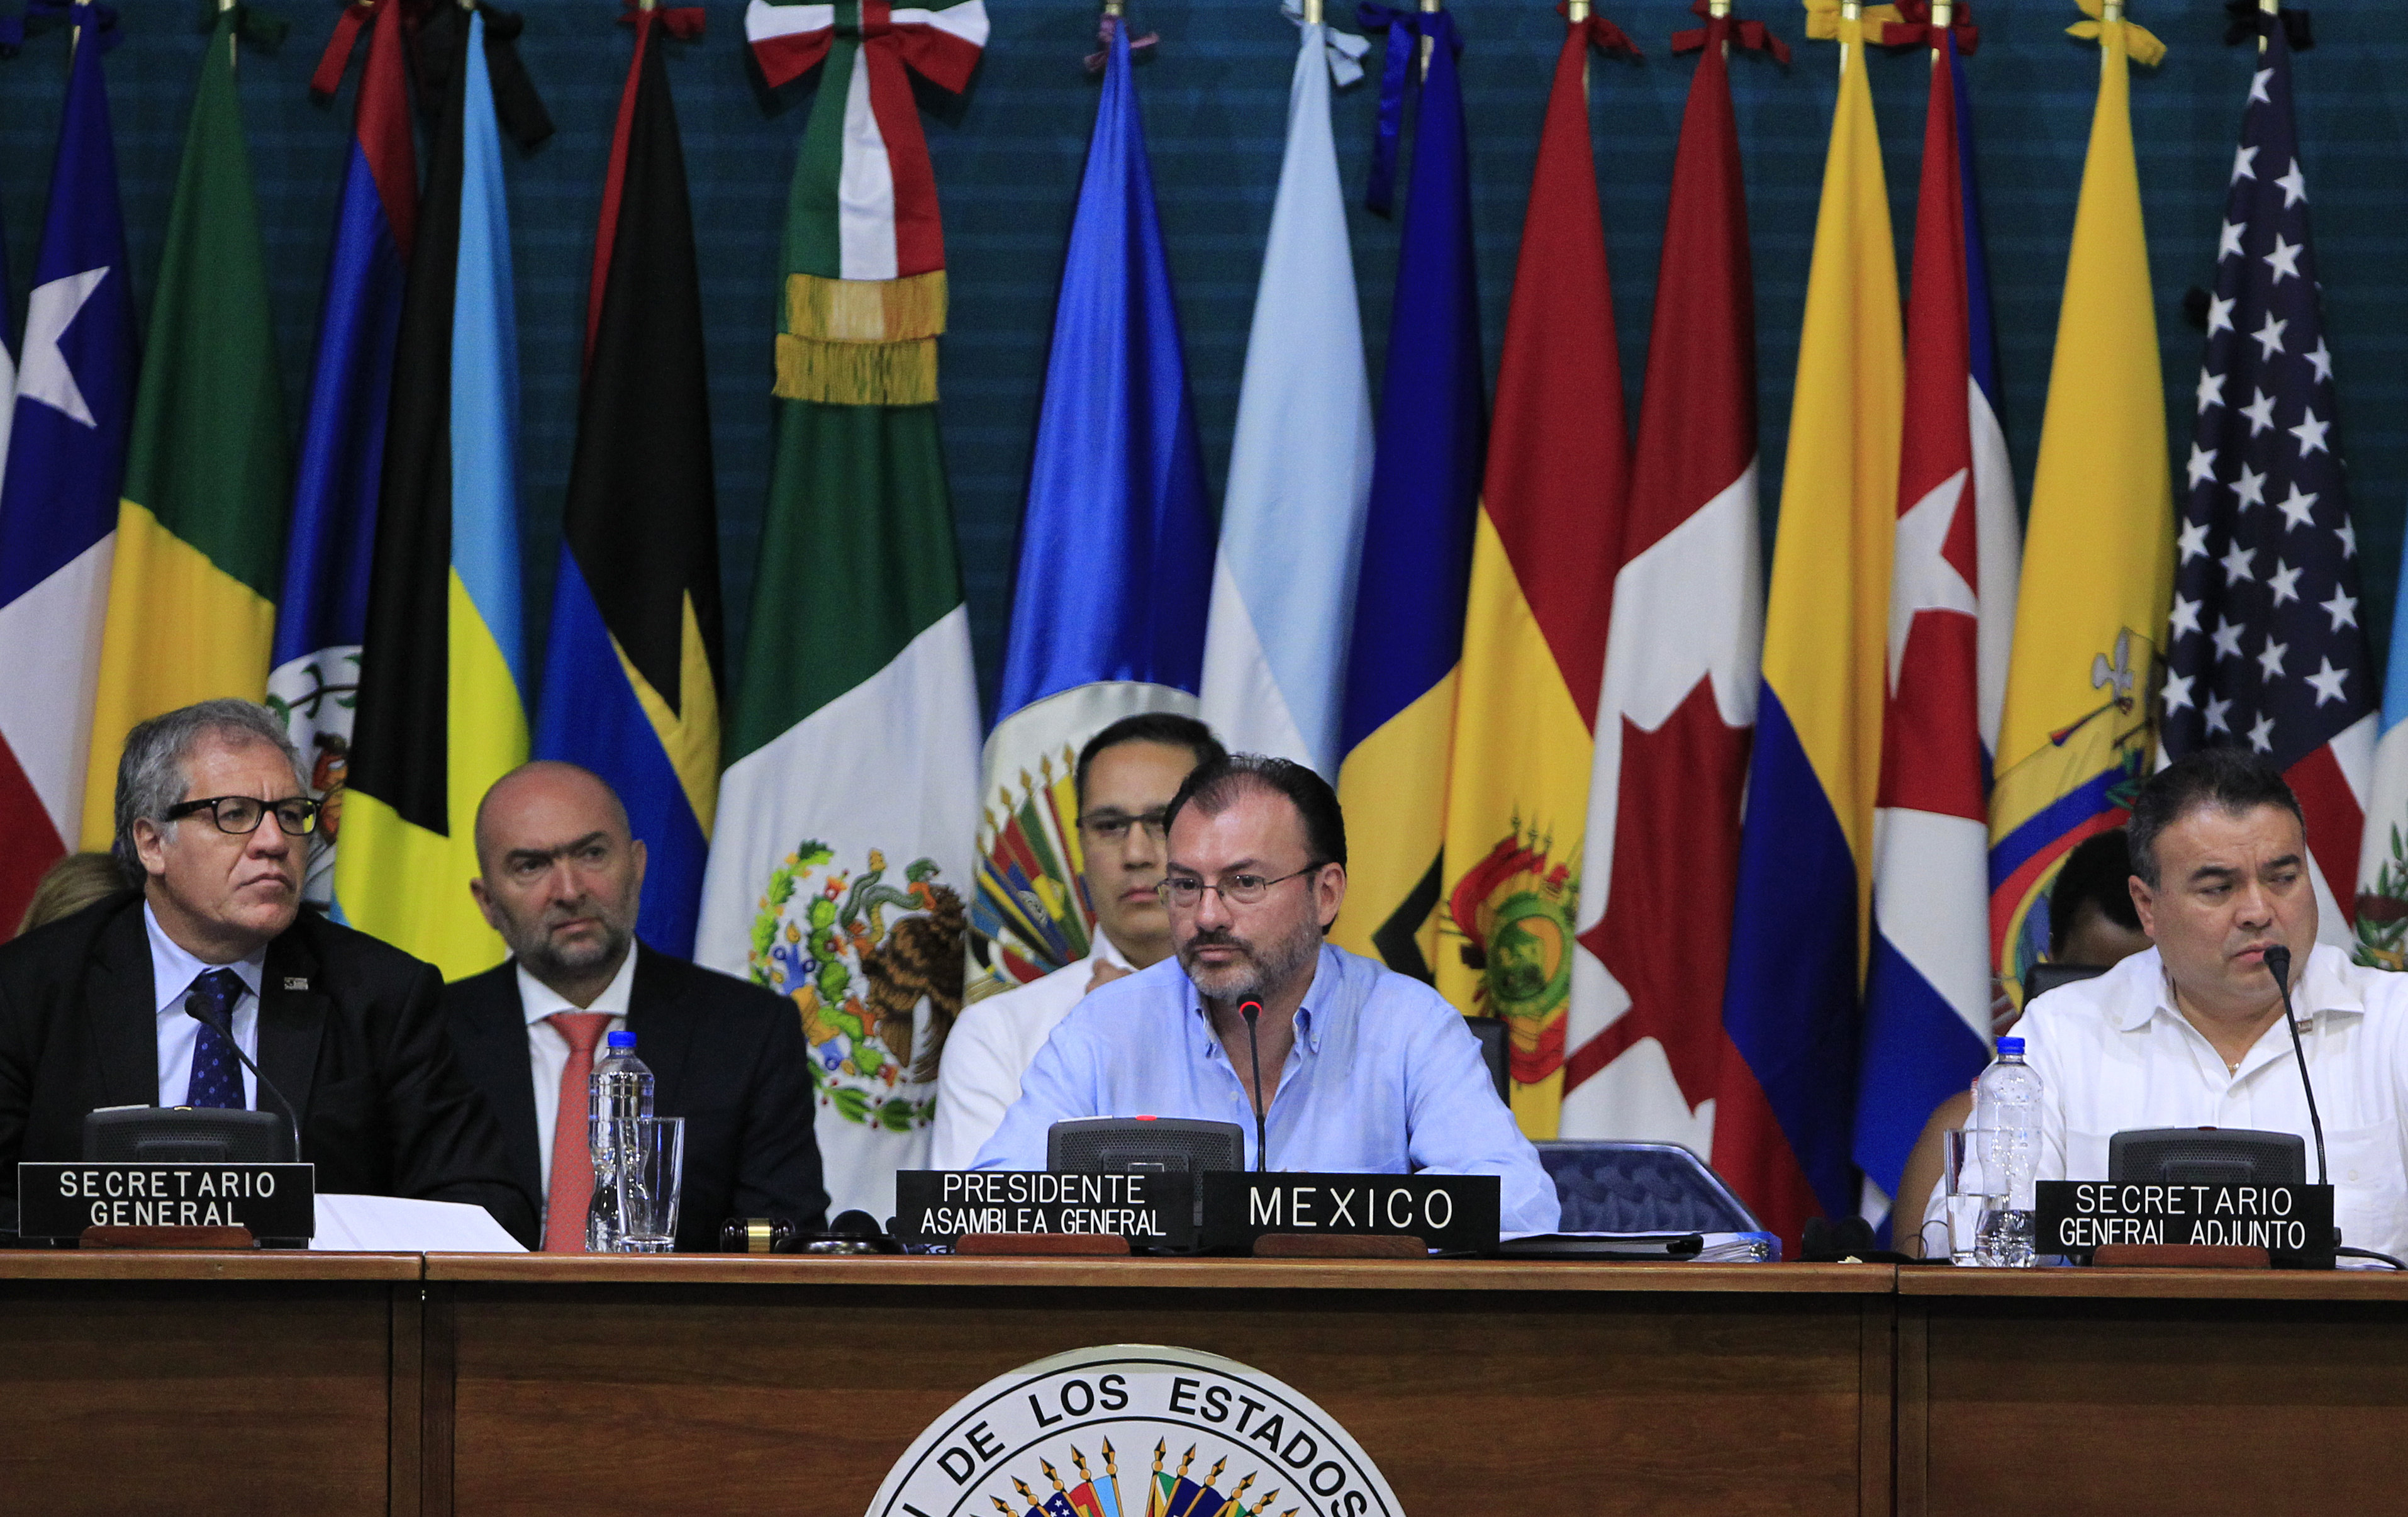 Cancilleres continuaron debate sobre Venezuela en la OEA: México batalló por un acuerdo